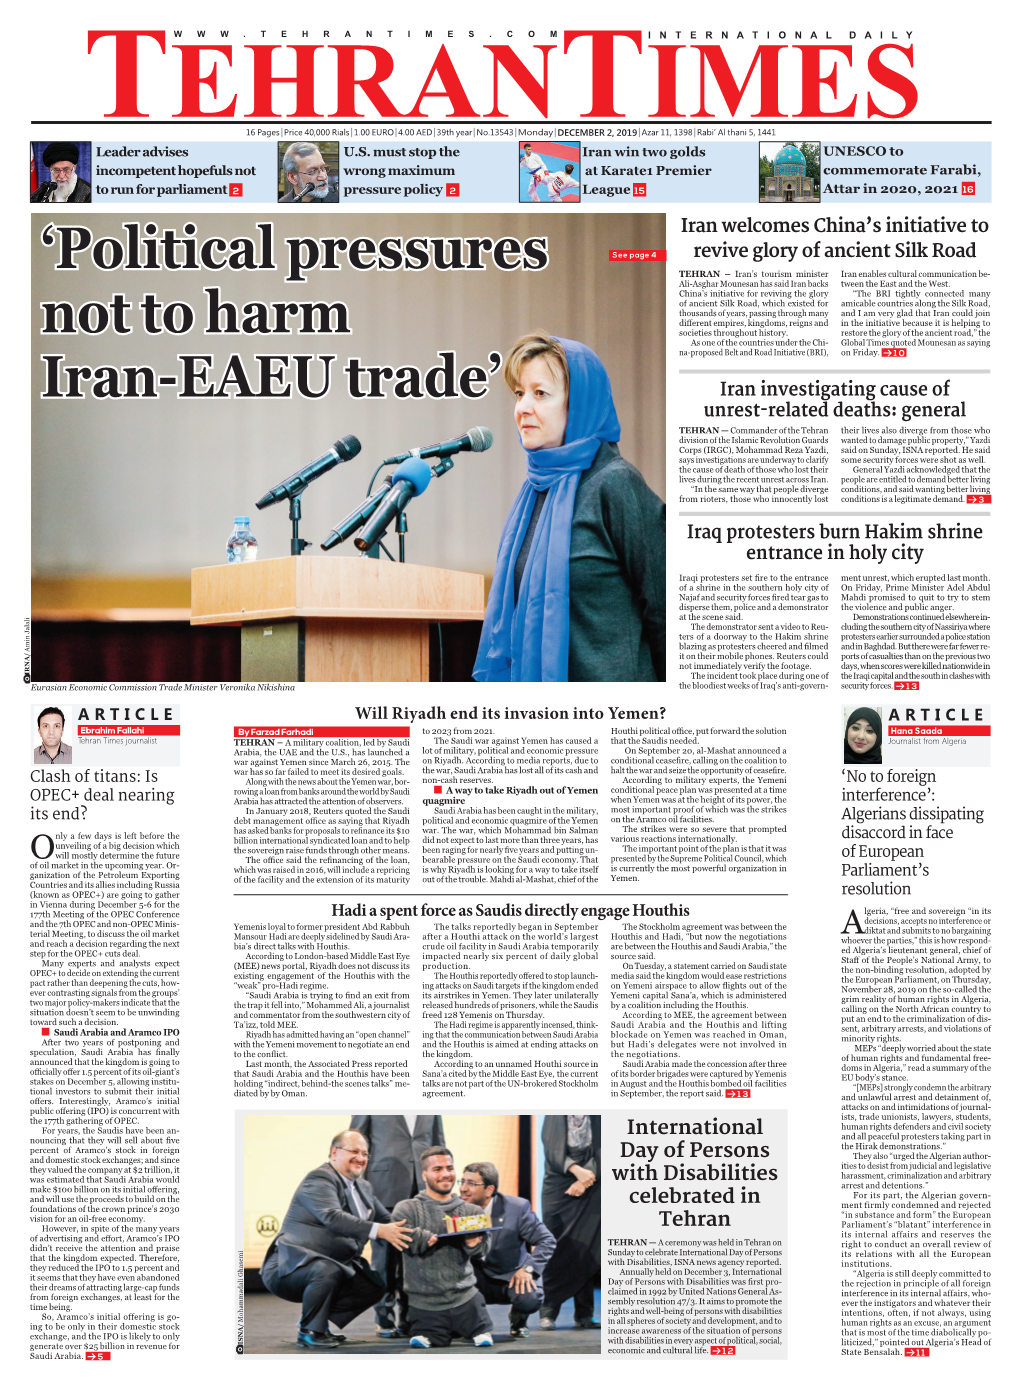 'Political Pressures Not to Harm Iran-EAEU Trade'